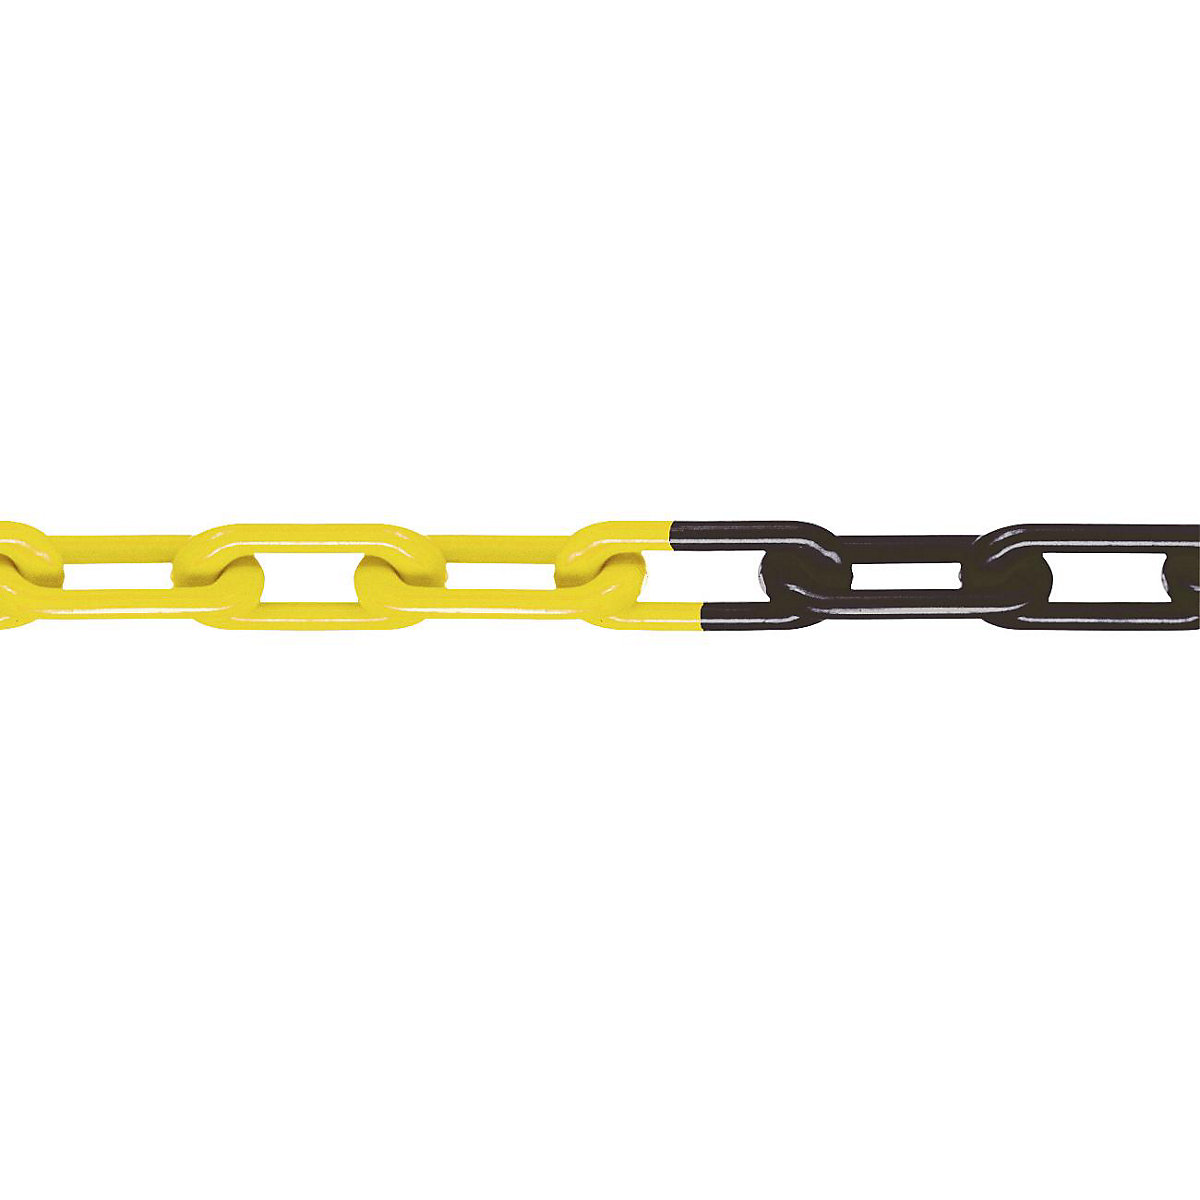 Nylon-kwaliteitsketting, MNK-kwaliteit 8, lengte 25 m, zwart/geel-5